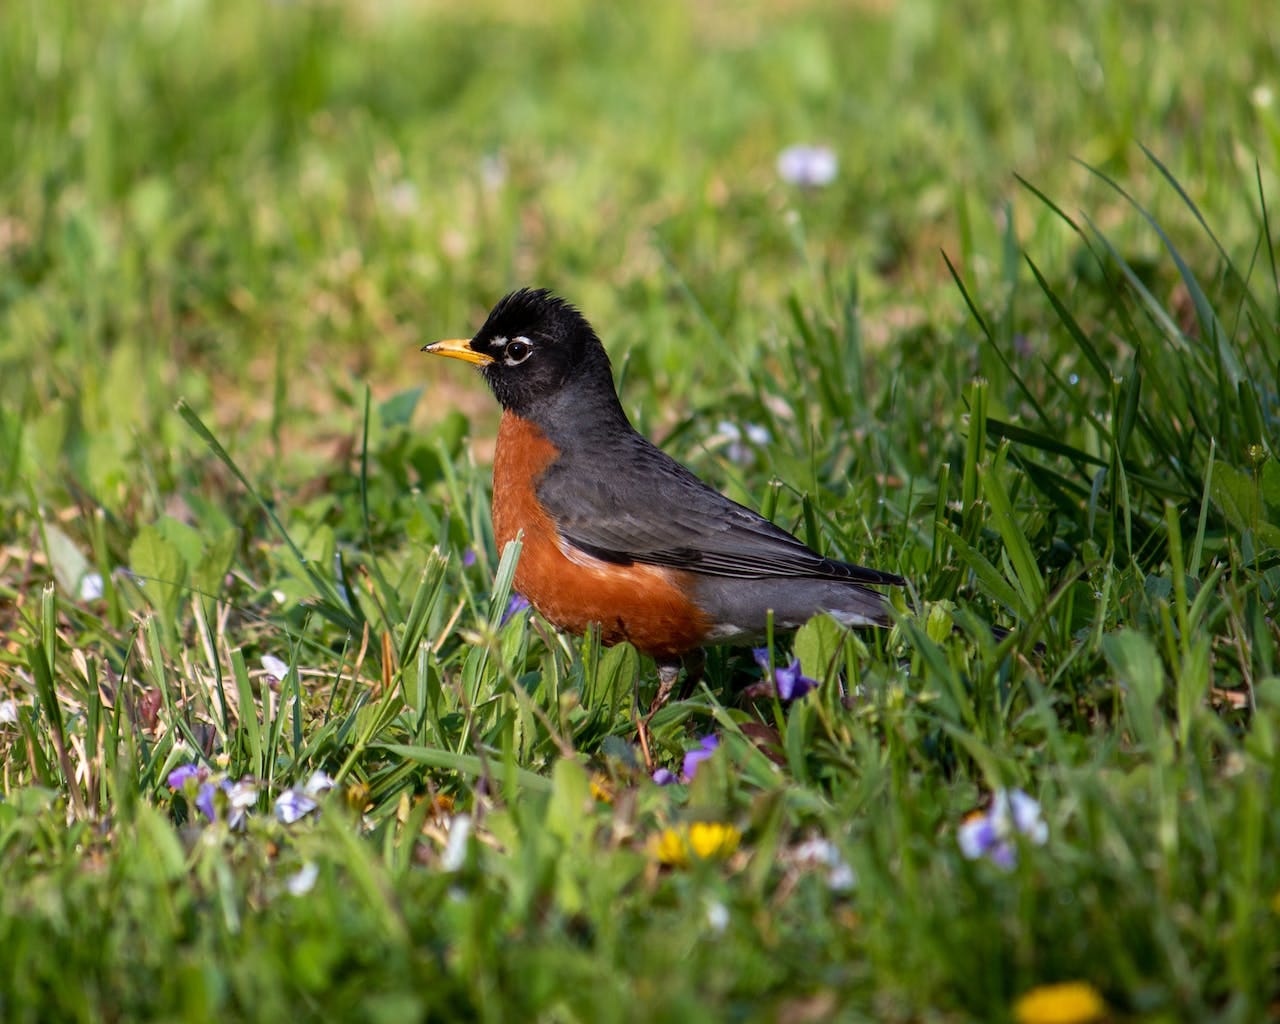 American robin in a grassy field